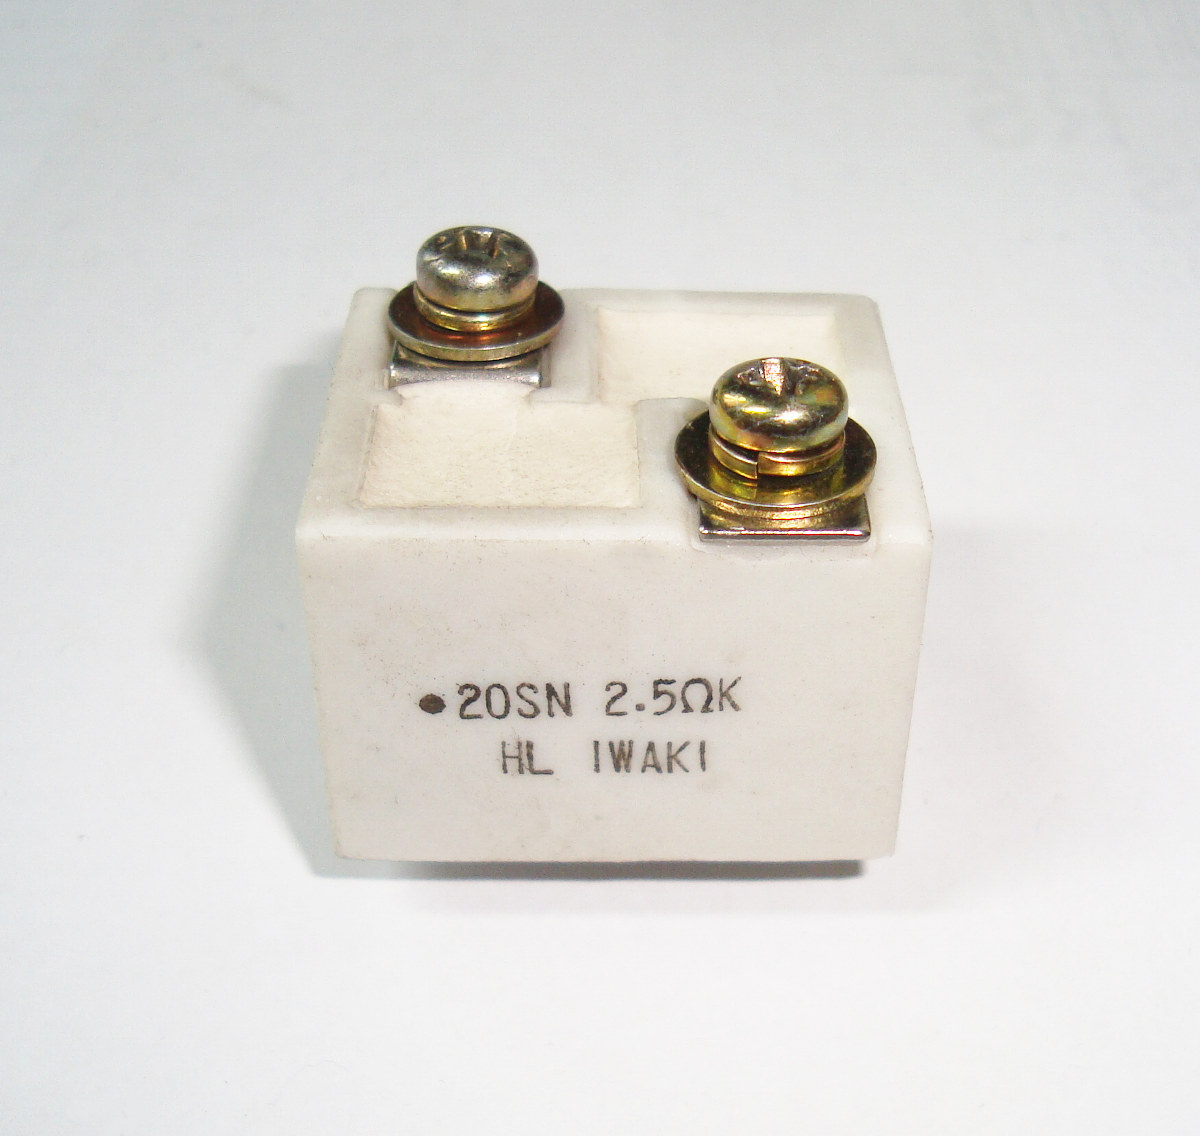 1 Iwaki Resistor 20sn Kaufen